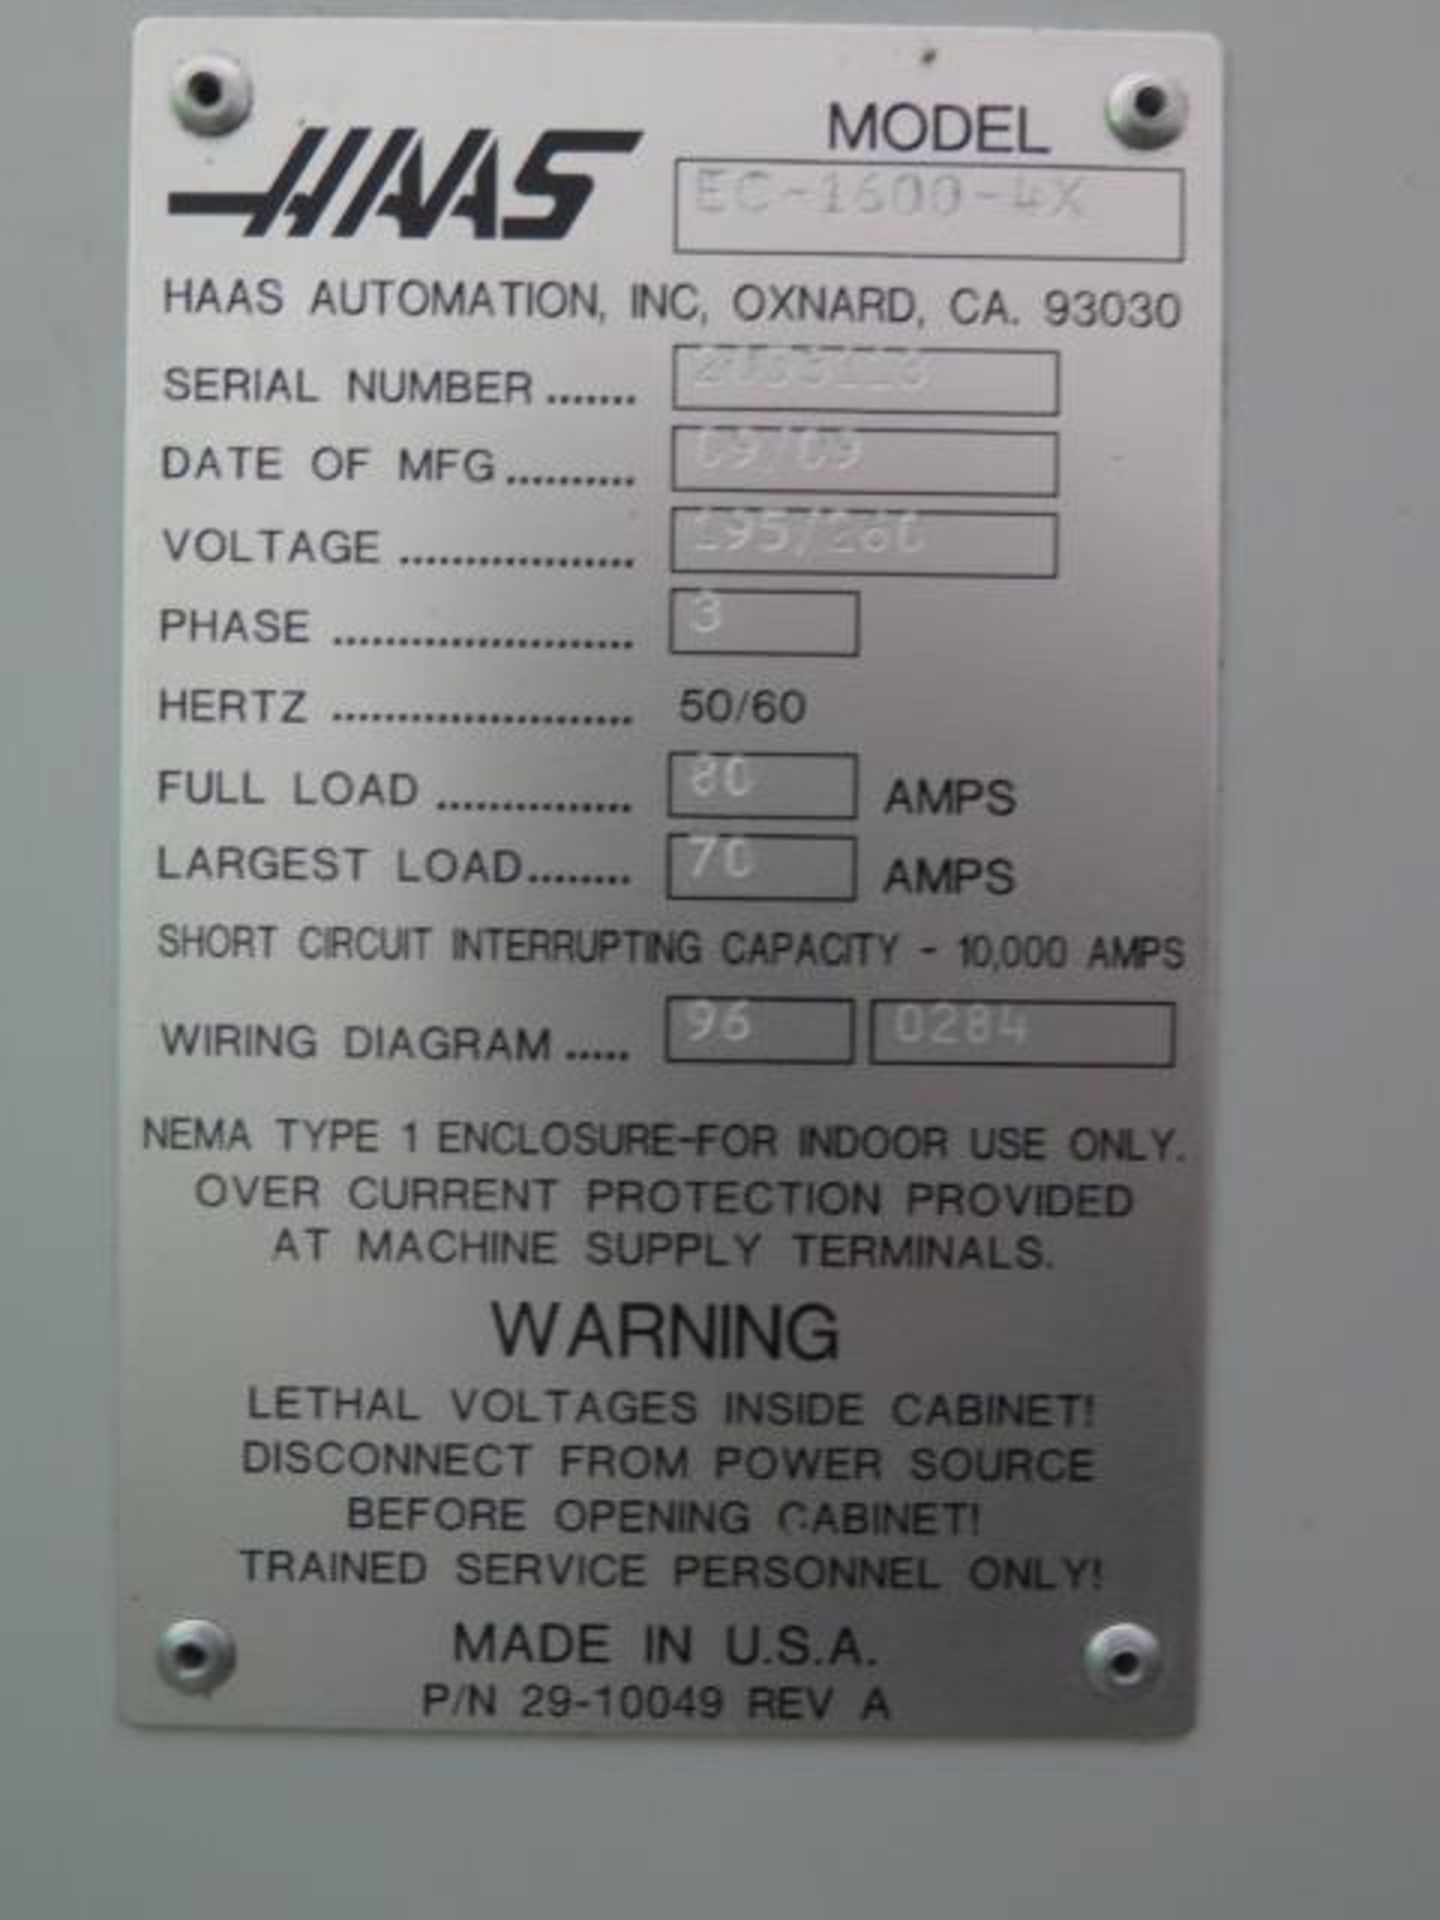 2009 Haas EC-1600-4X 4-Axis CNC Horizontal Machining Center s/n 2053113 w/ Haas Controls, hand - Image 28 of 28